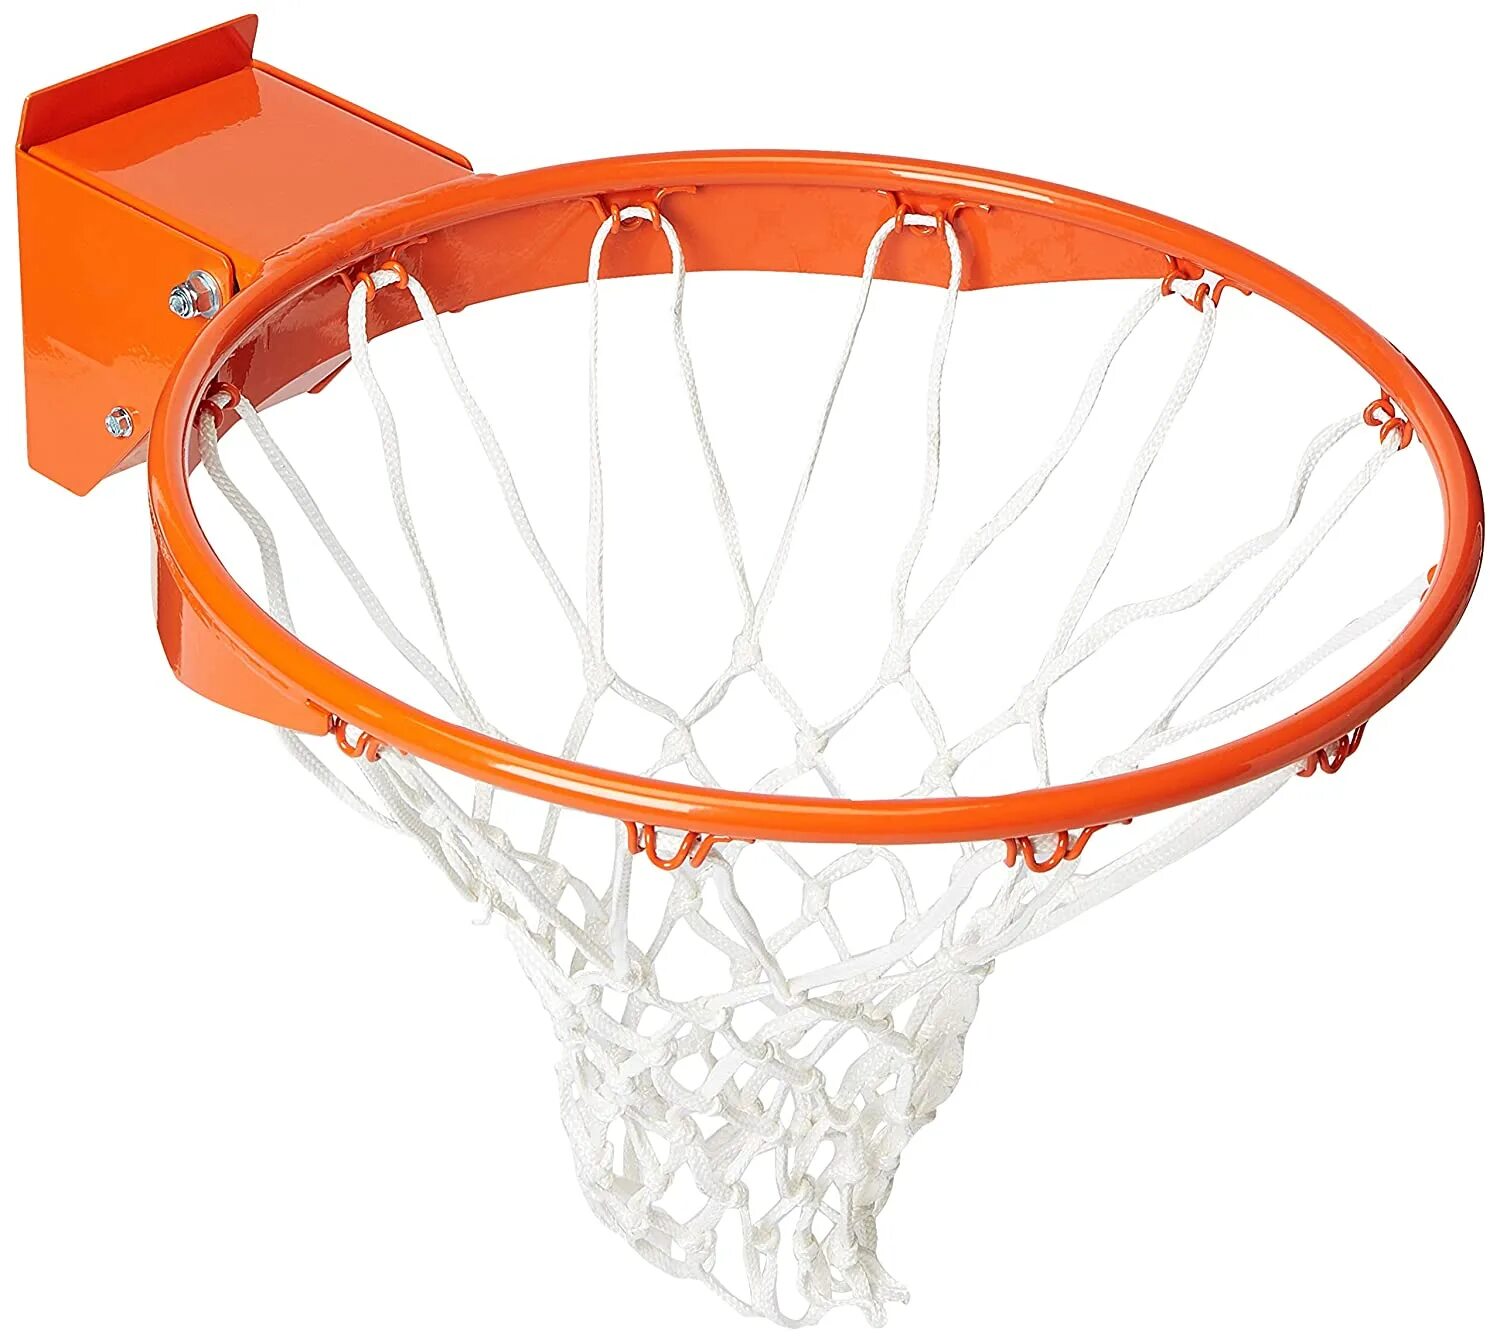 Корзина баскетбольная большая. Баскетбольное кольцо. Кольцо для баскетбола. Баскетбольное кольцо профессиональное. Кронштейн баскетбольное кольцо.